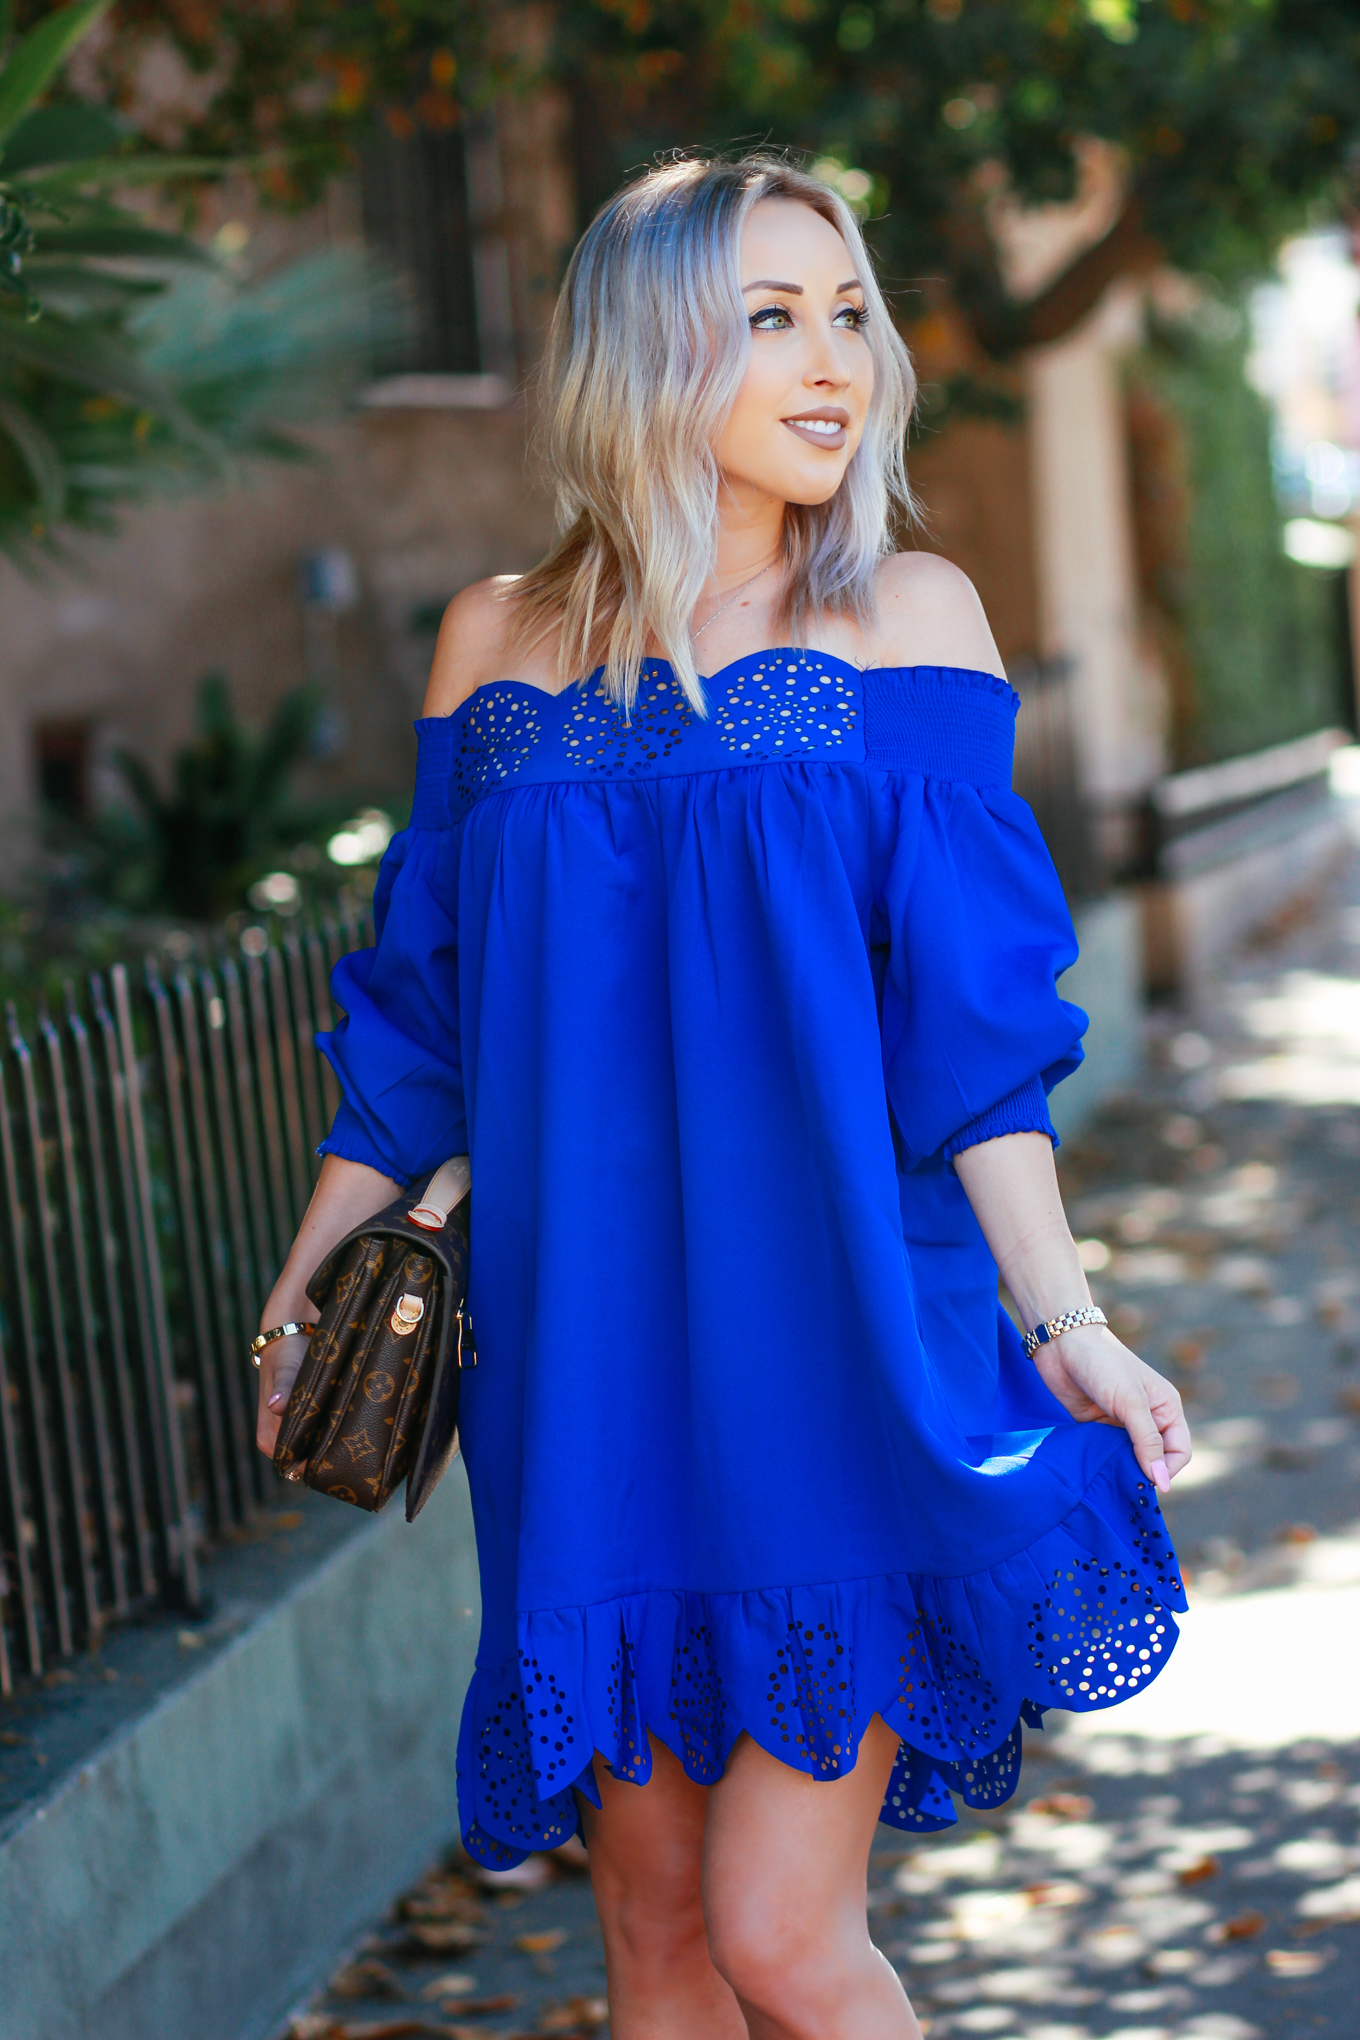 Blondie in the City | Bright Blue Scalloped Off The Shoulder Dress | Louis Vuitton Pochette Metis | Bright Blue Summer Dress